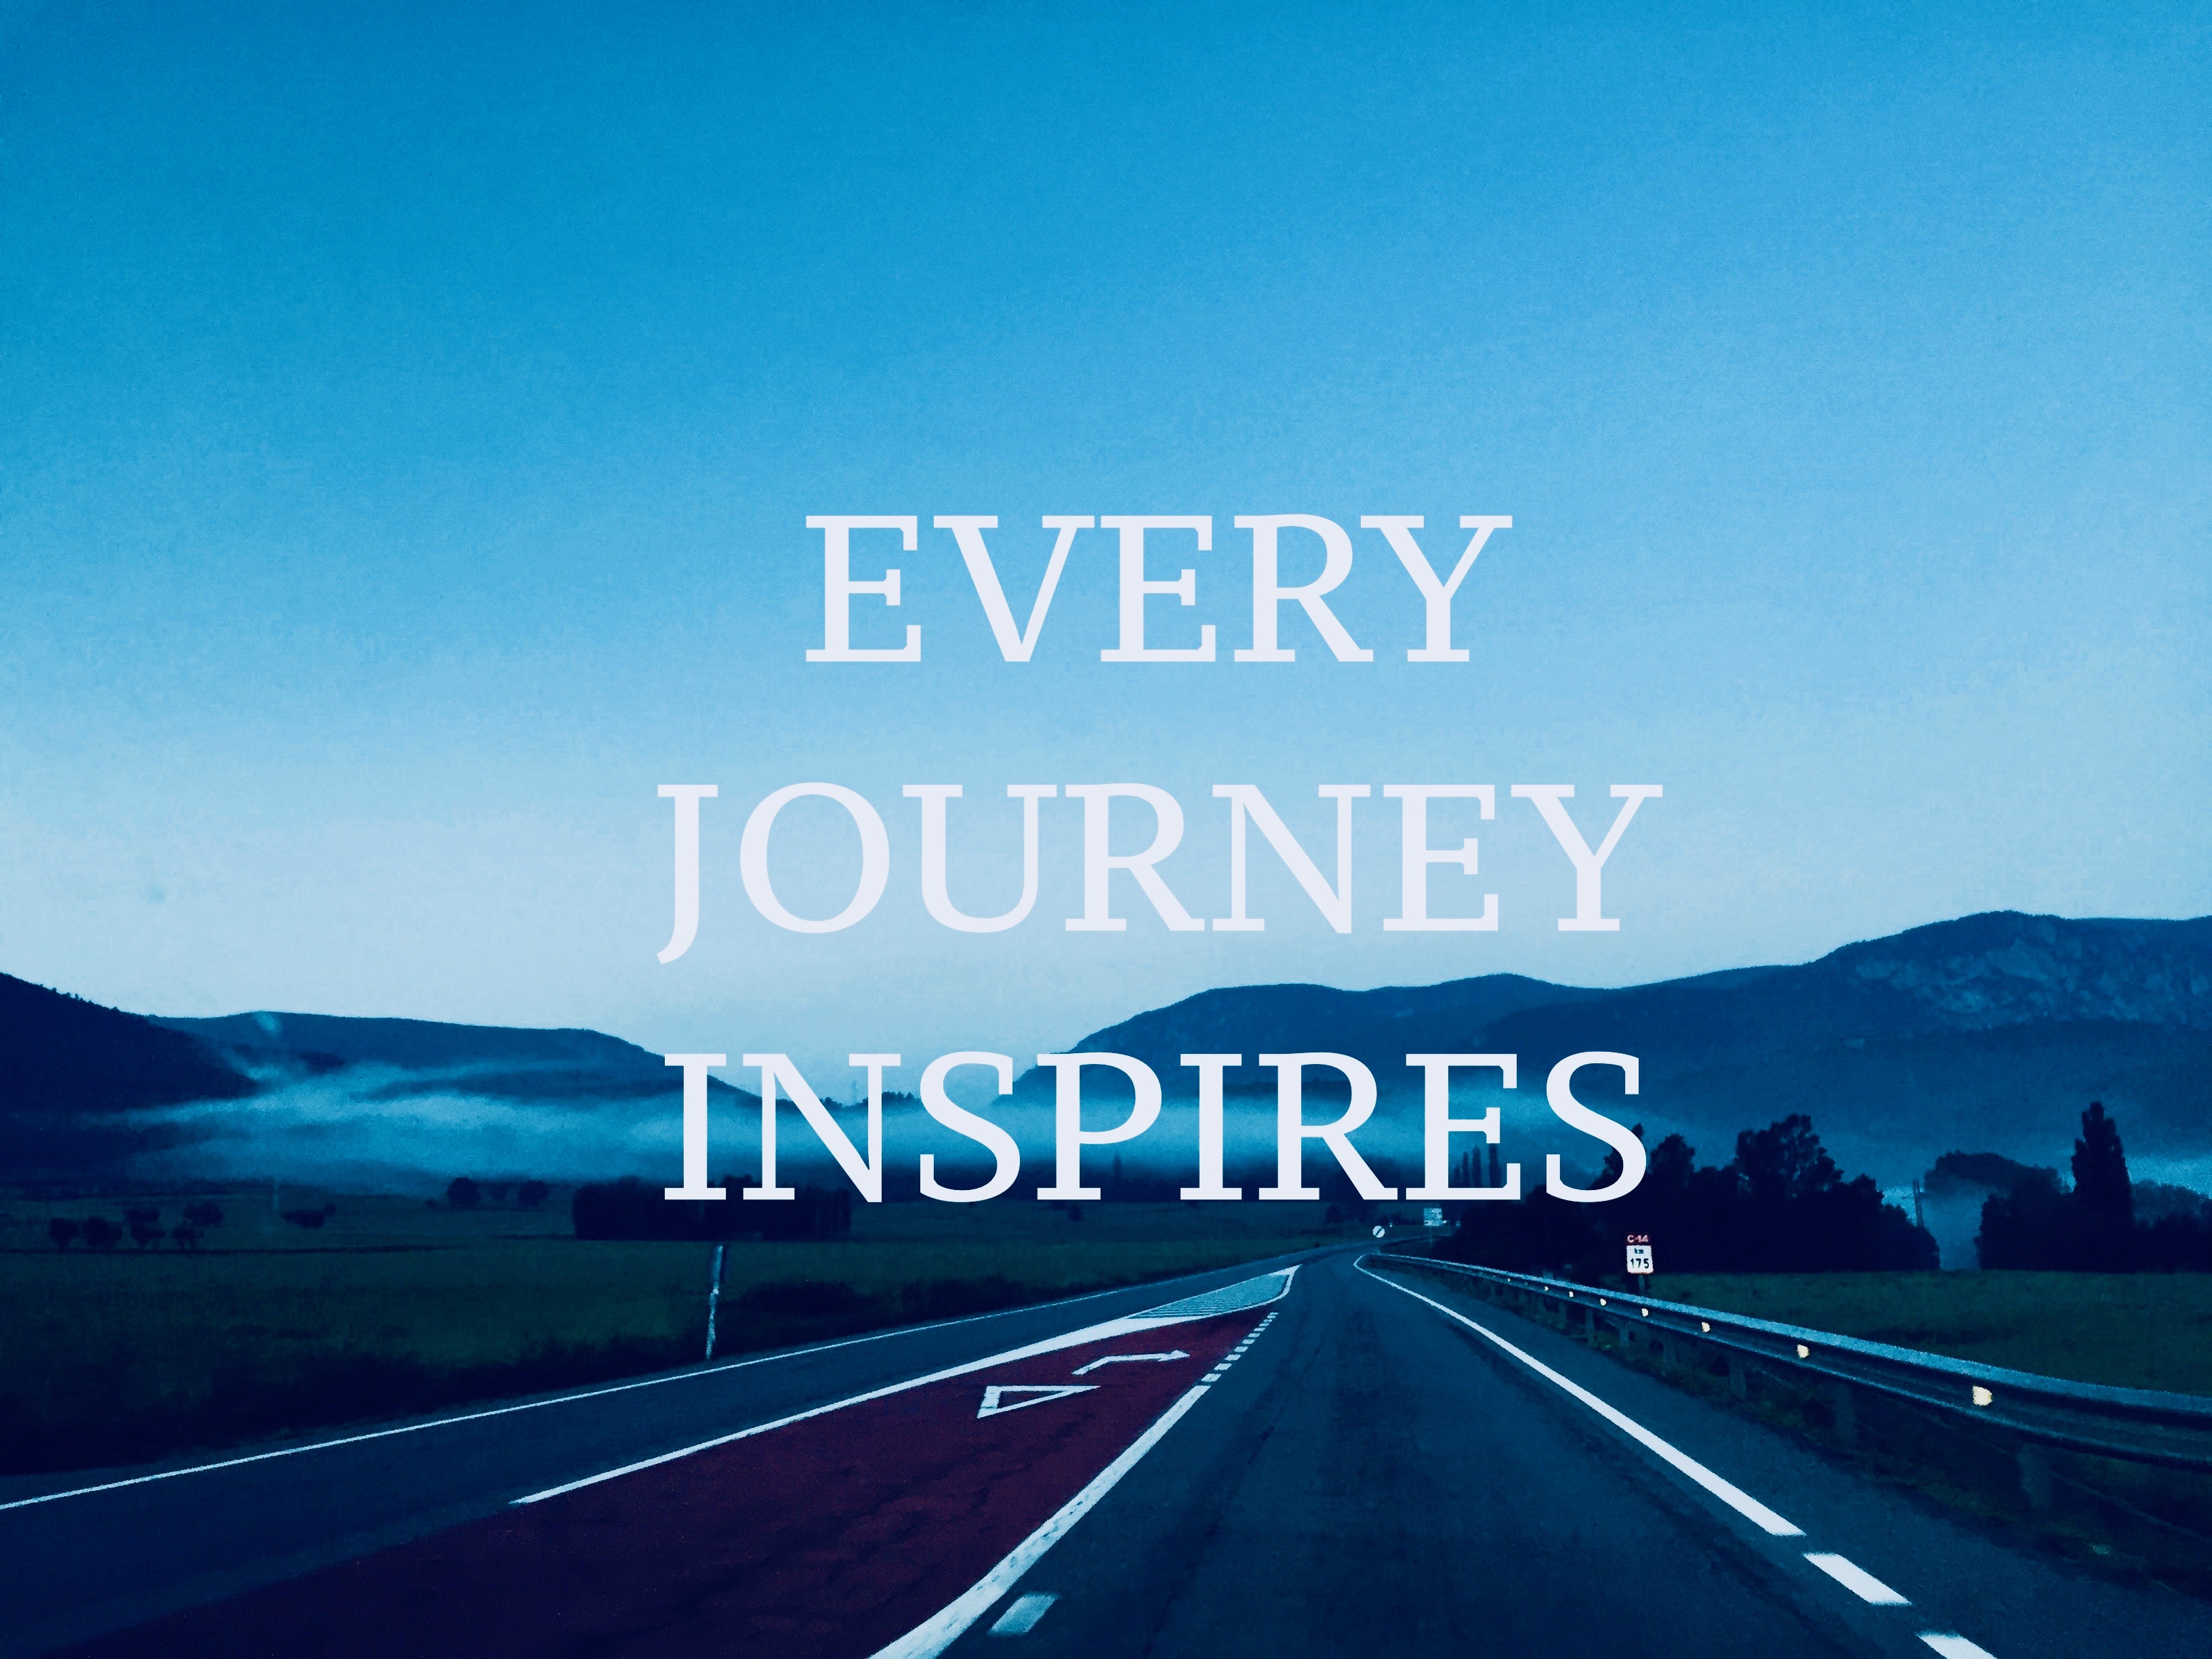 Start a journey. Just Travel. Starting Journey inspiring pics.